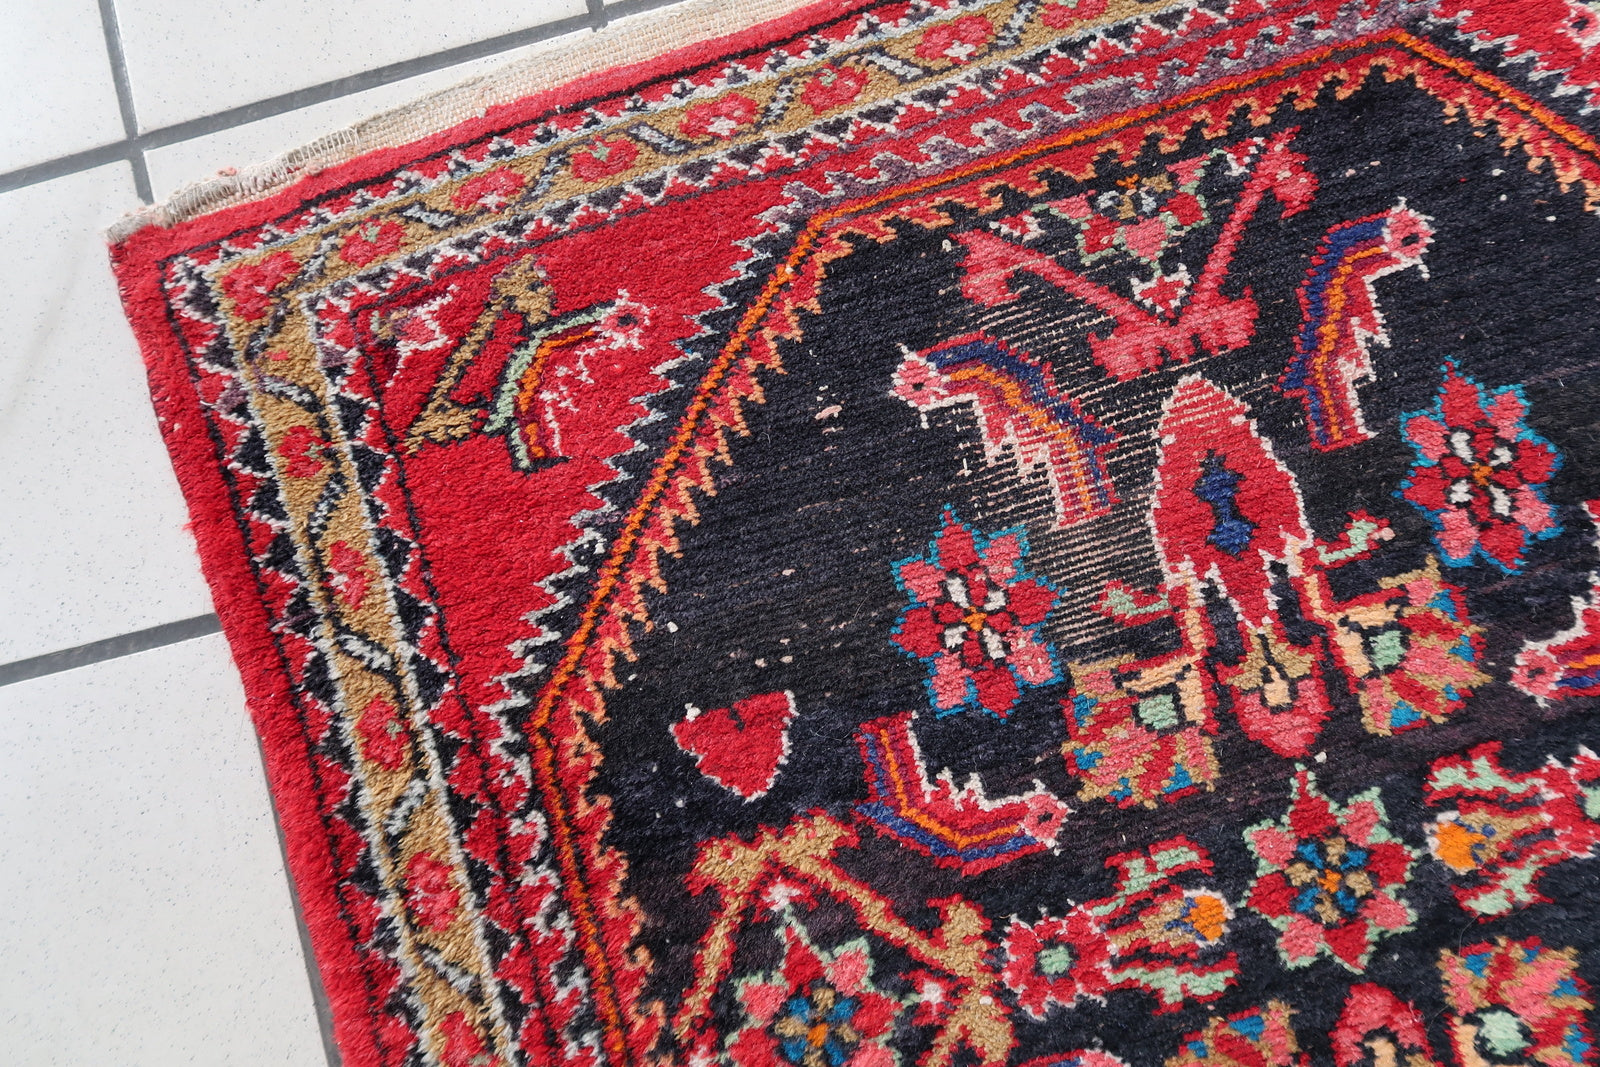 Close-up of geometric design on Handmade Vintage Persian Hamadan Rug - Detailed view showcasing the intricate geometric patterns.